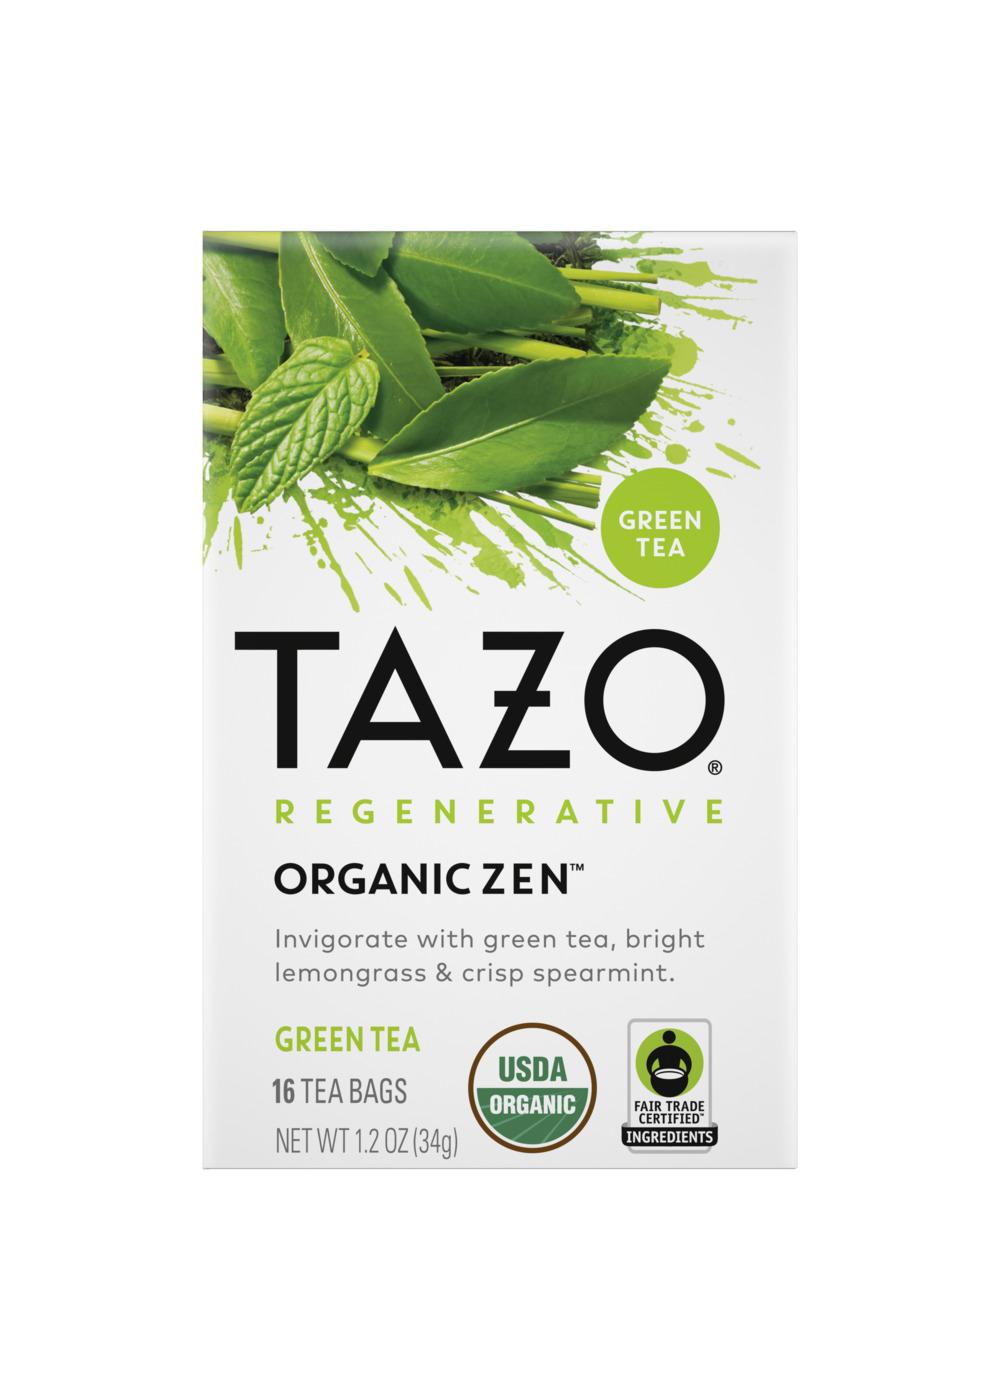 Tazo Regenerative Organic Zen Green Tea Bags; image 1 of 6